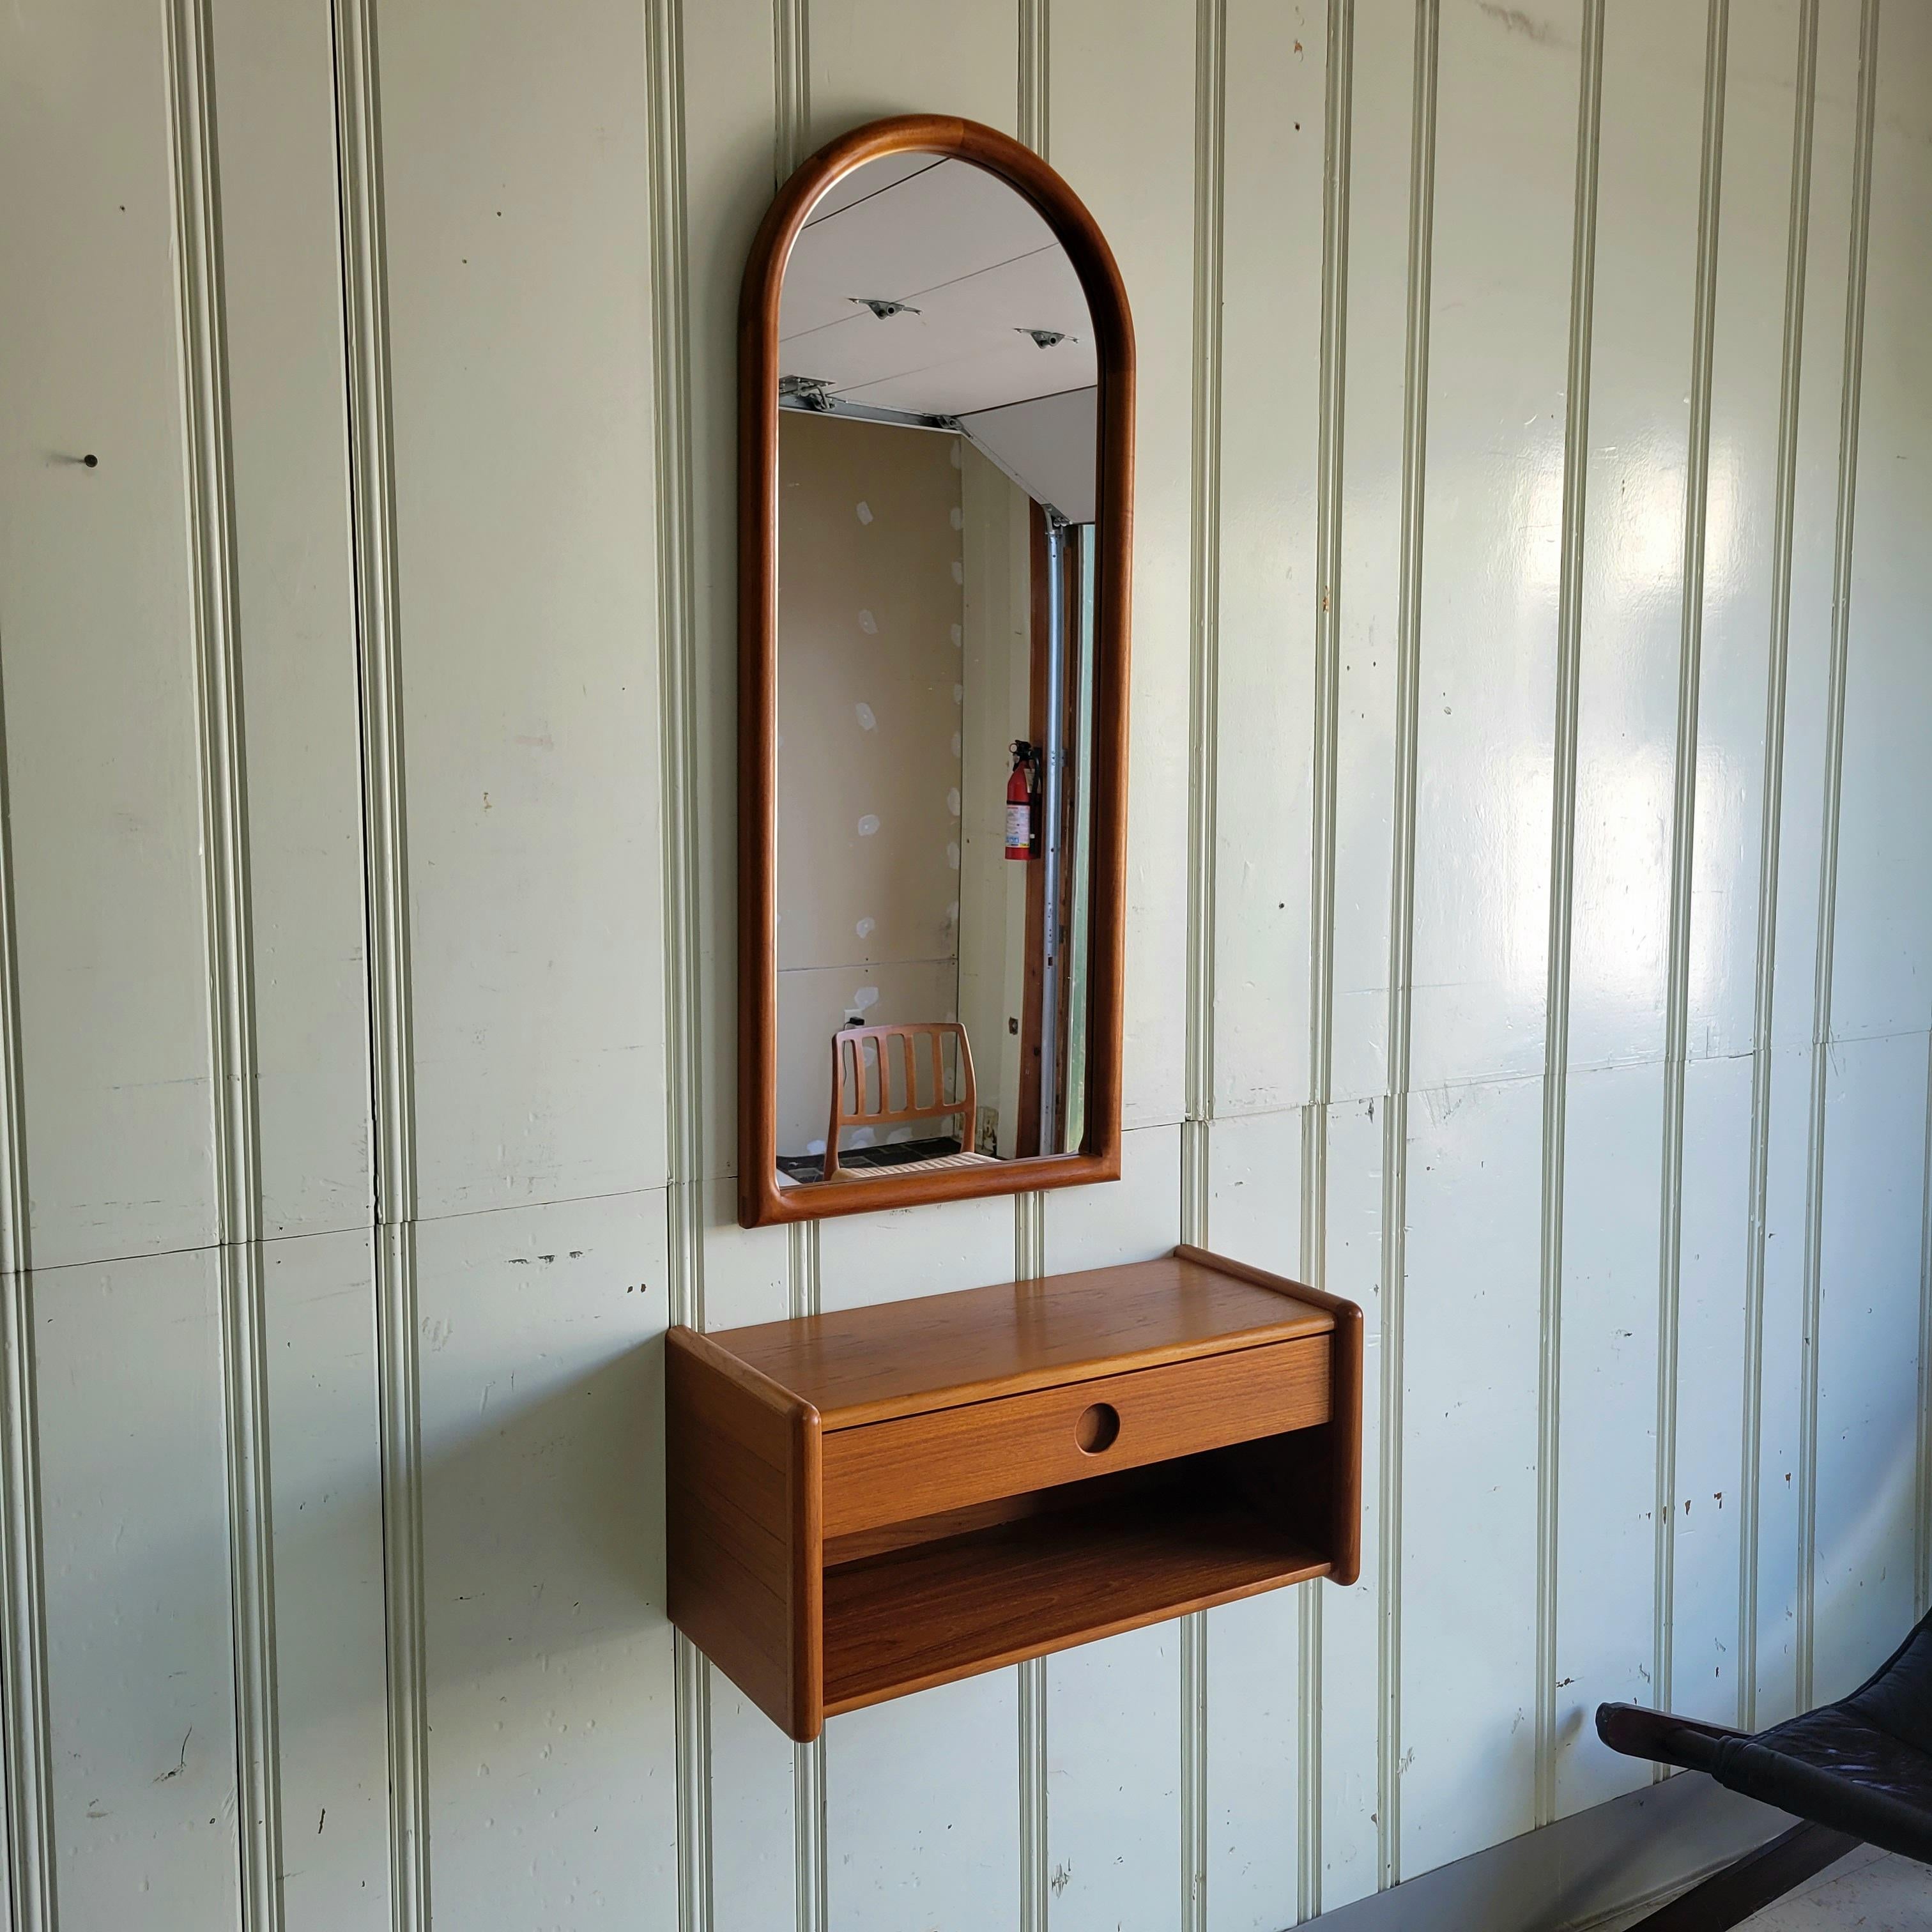 Kai Kristiansen designed teak mirror and floating cabinet for Vildbjerg Møbelfabrik. 

Mirror measures 17.75